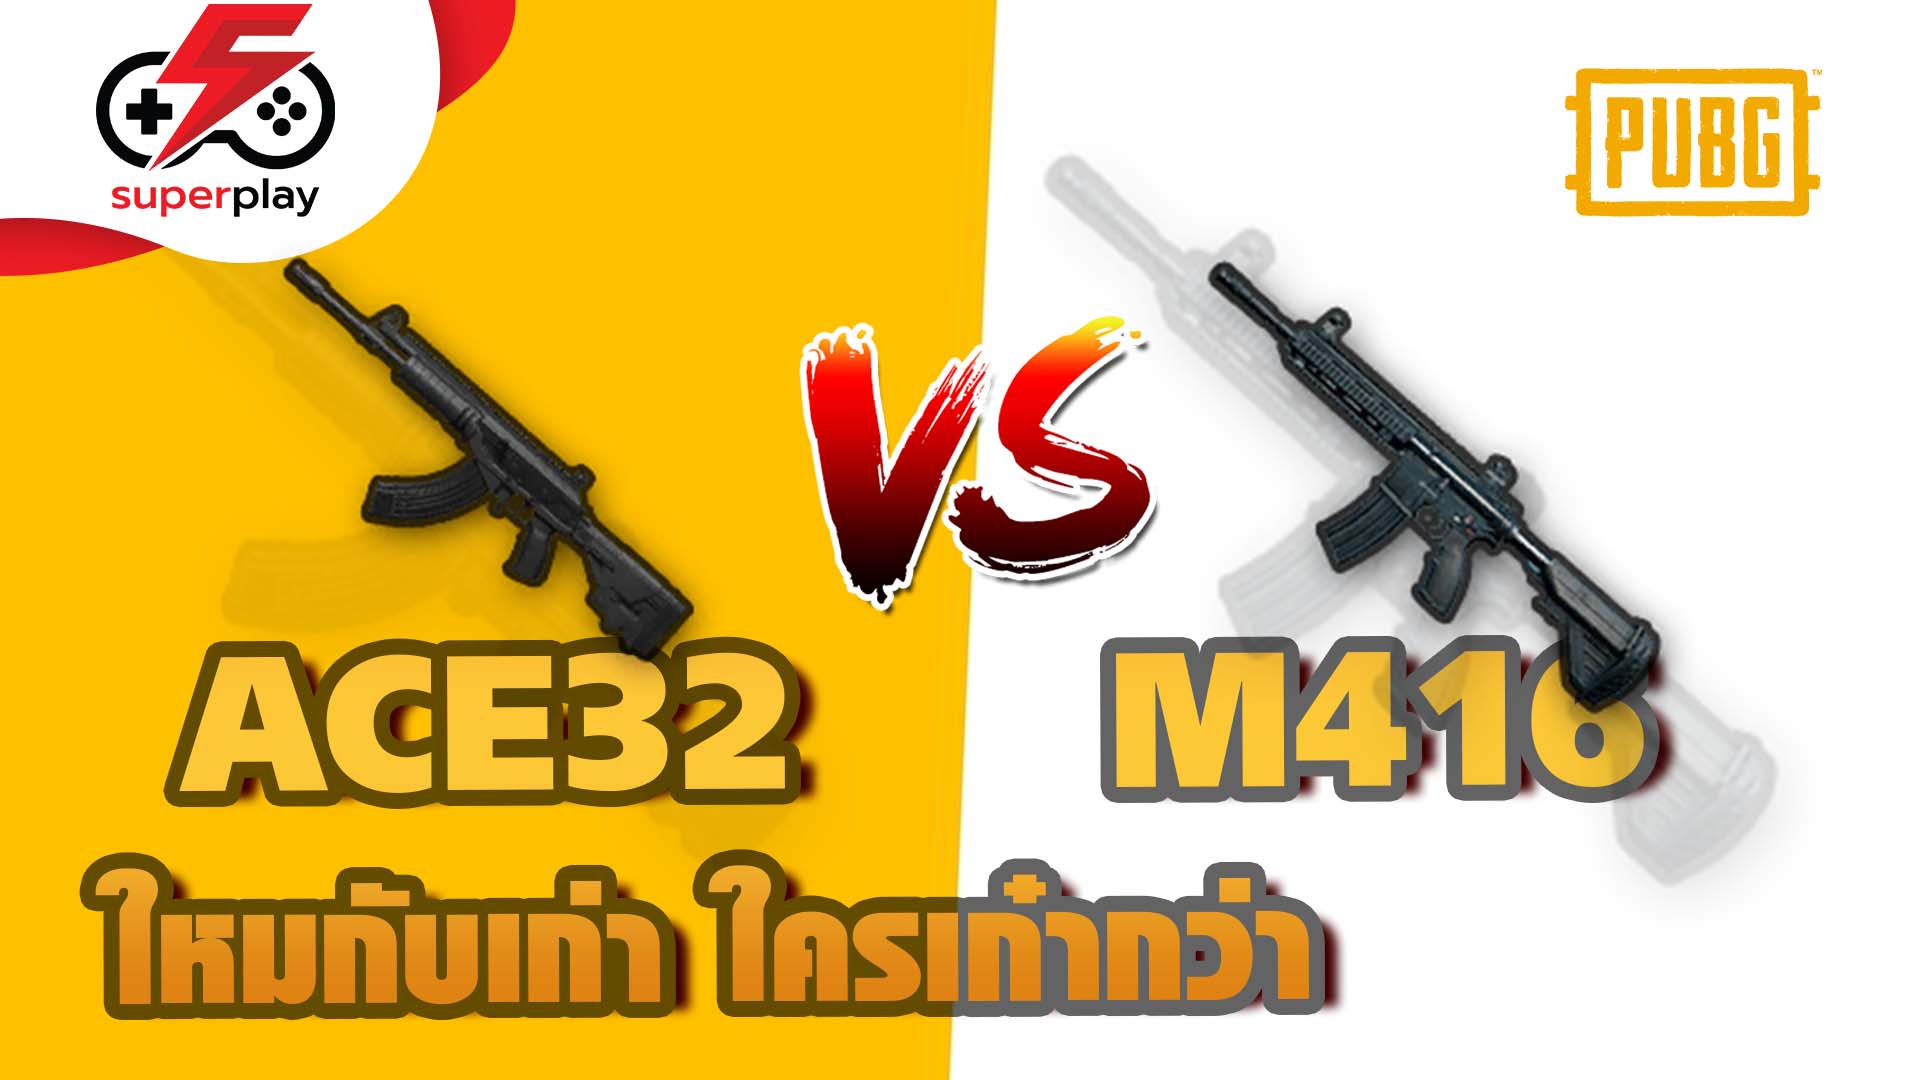 PUBG - ปืนใหม่ ACE32 กับ M416 ใครโหดกว่า ใหม่จะสู้เก่าได้มั้ย มาดูกัน